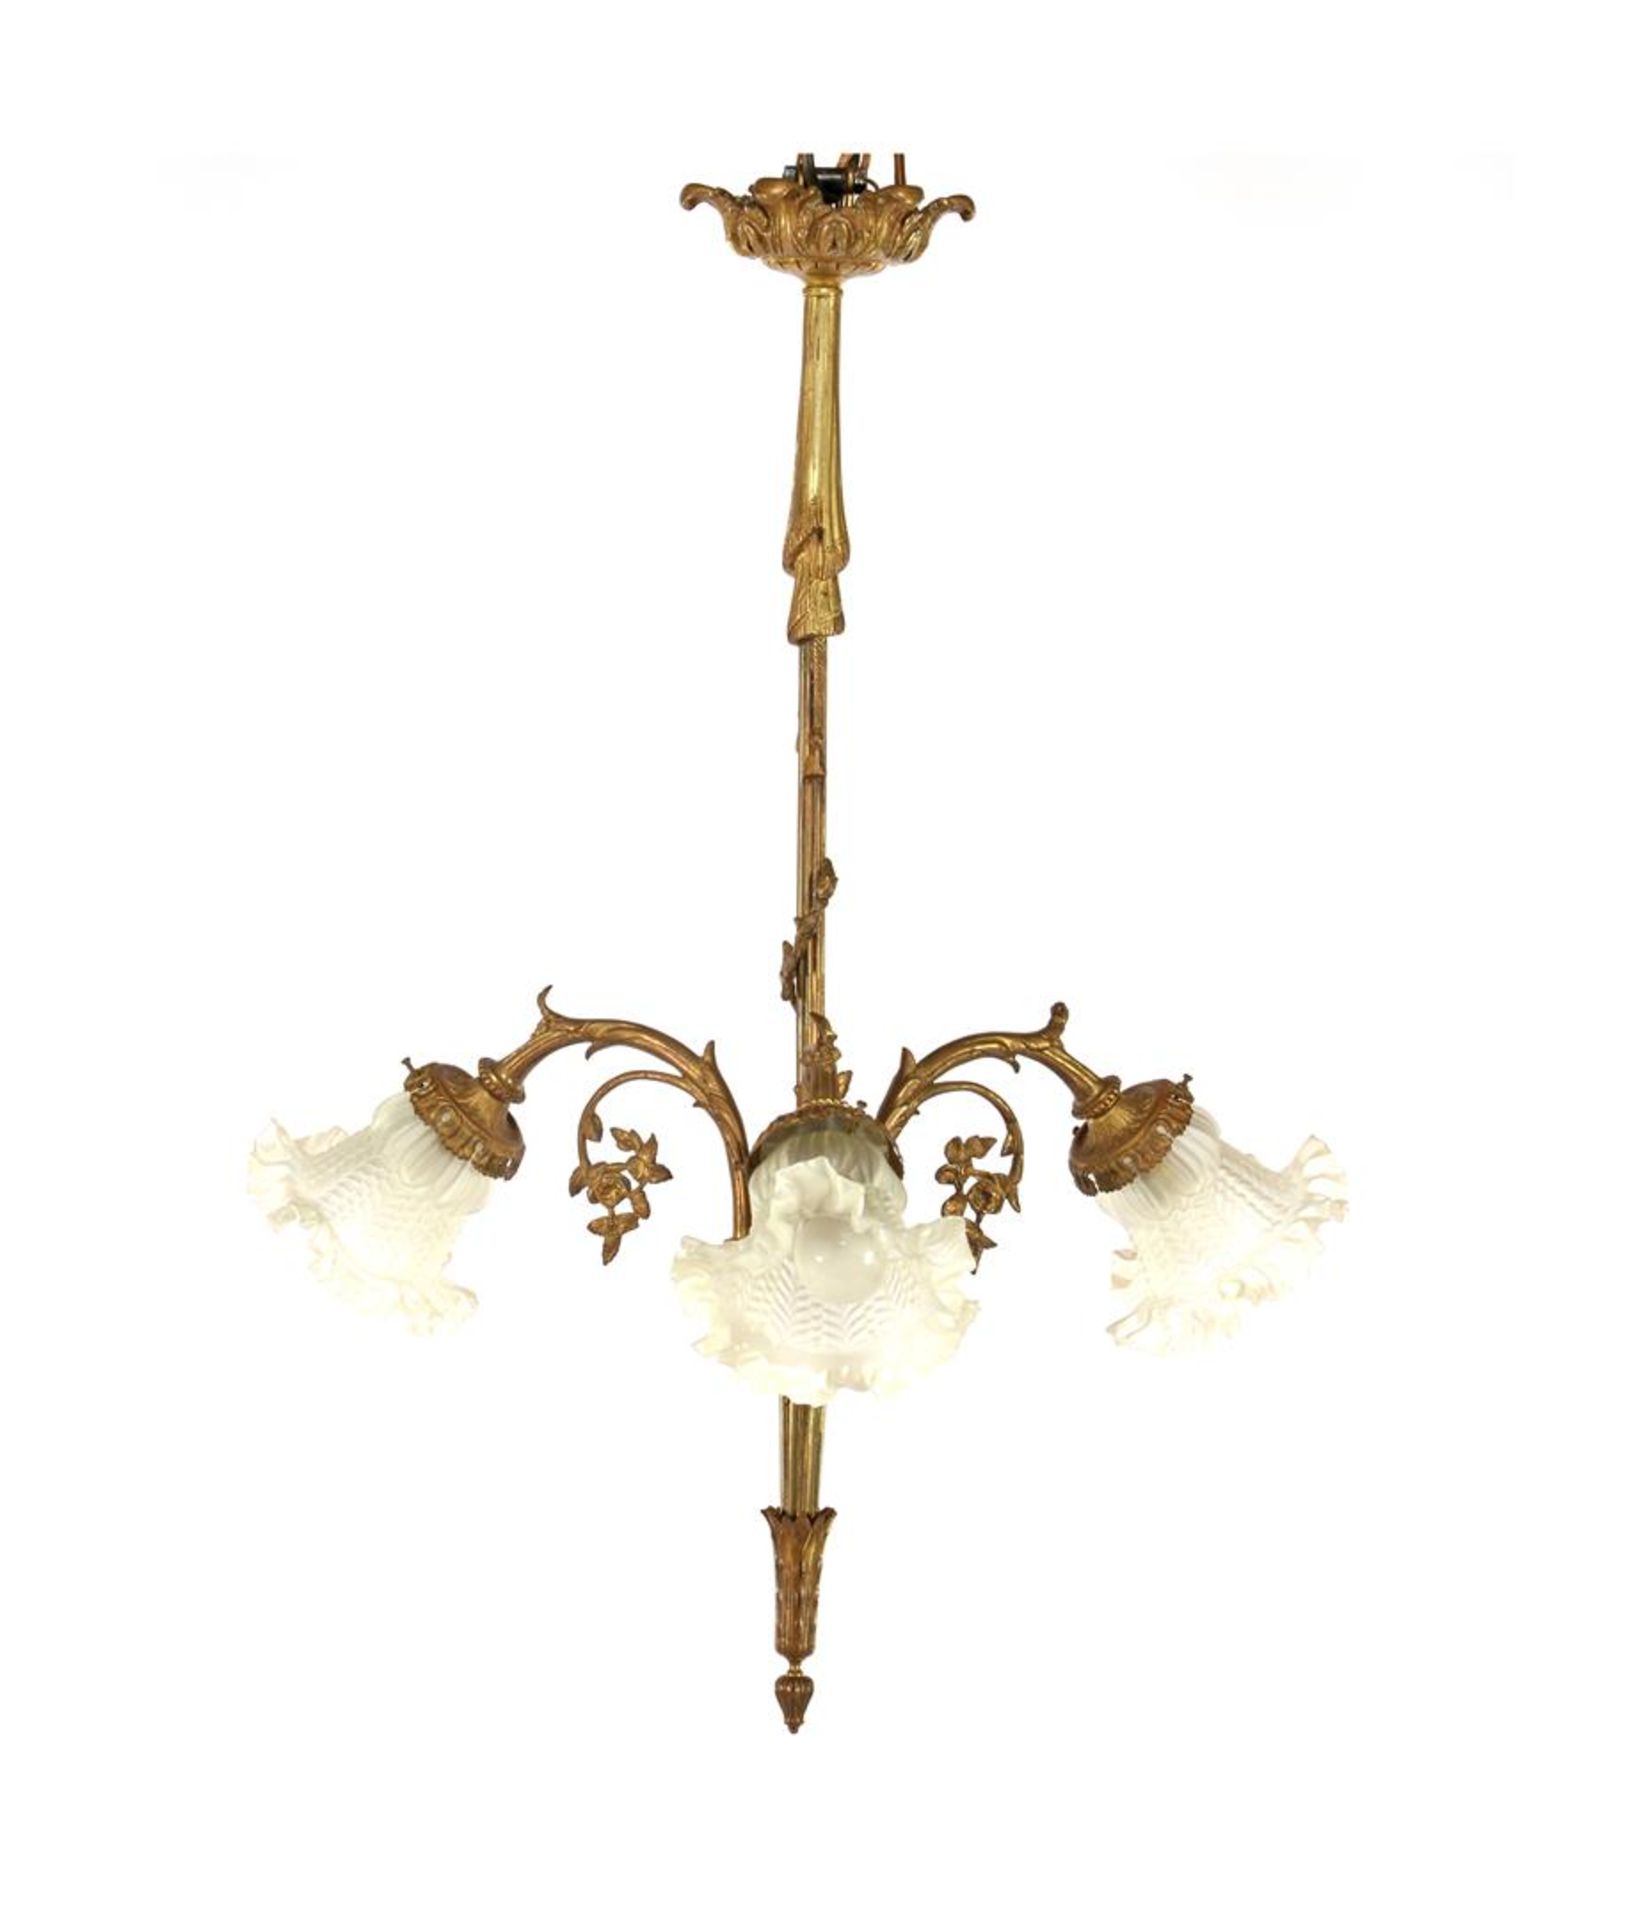 Classic 3-light bronze hanging lamp